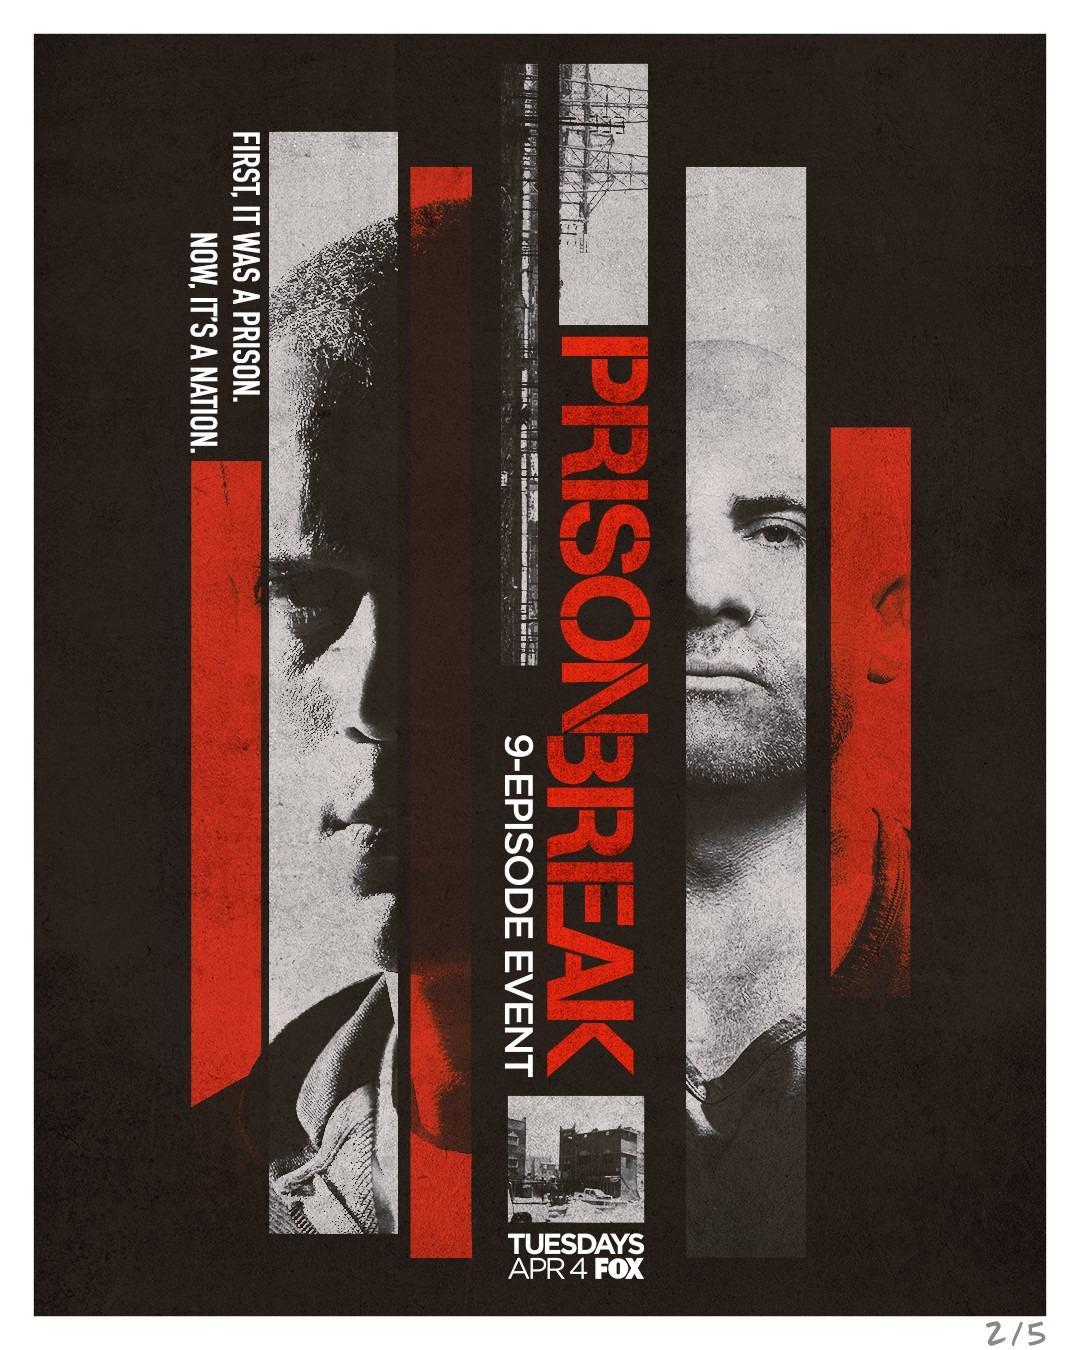 Постер фильма Побег из тюрьмы | Prison Break